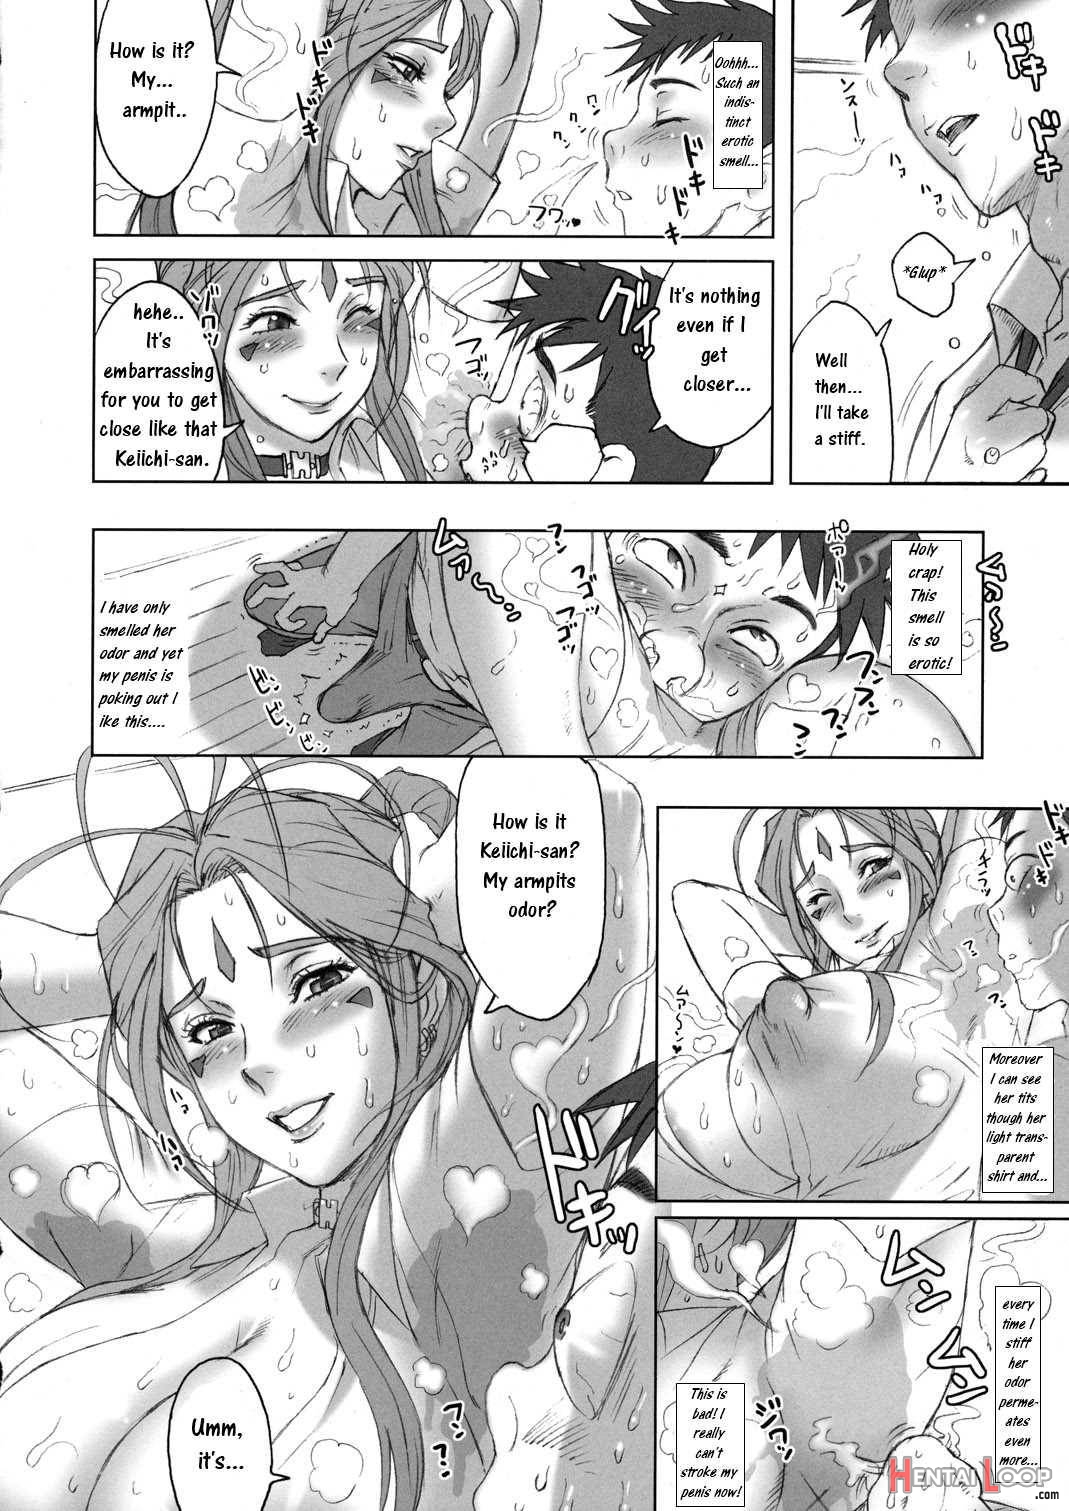 Nippon Change page 7